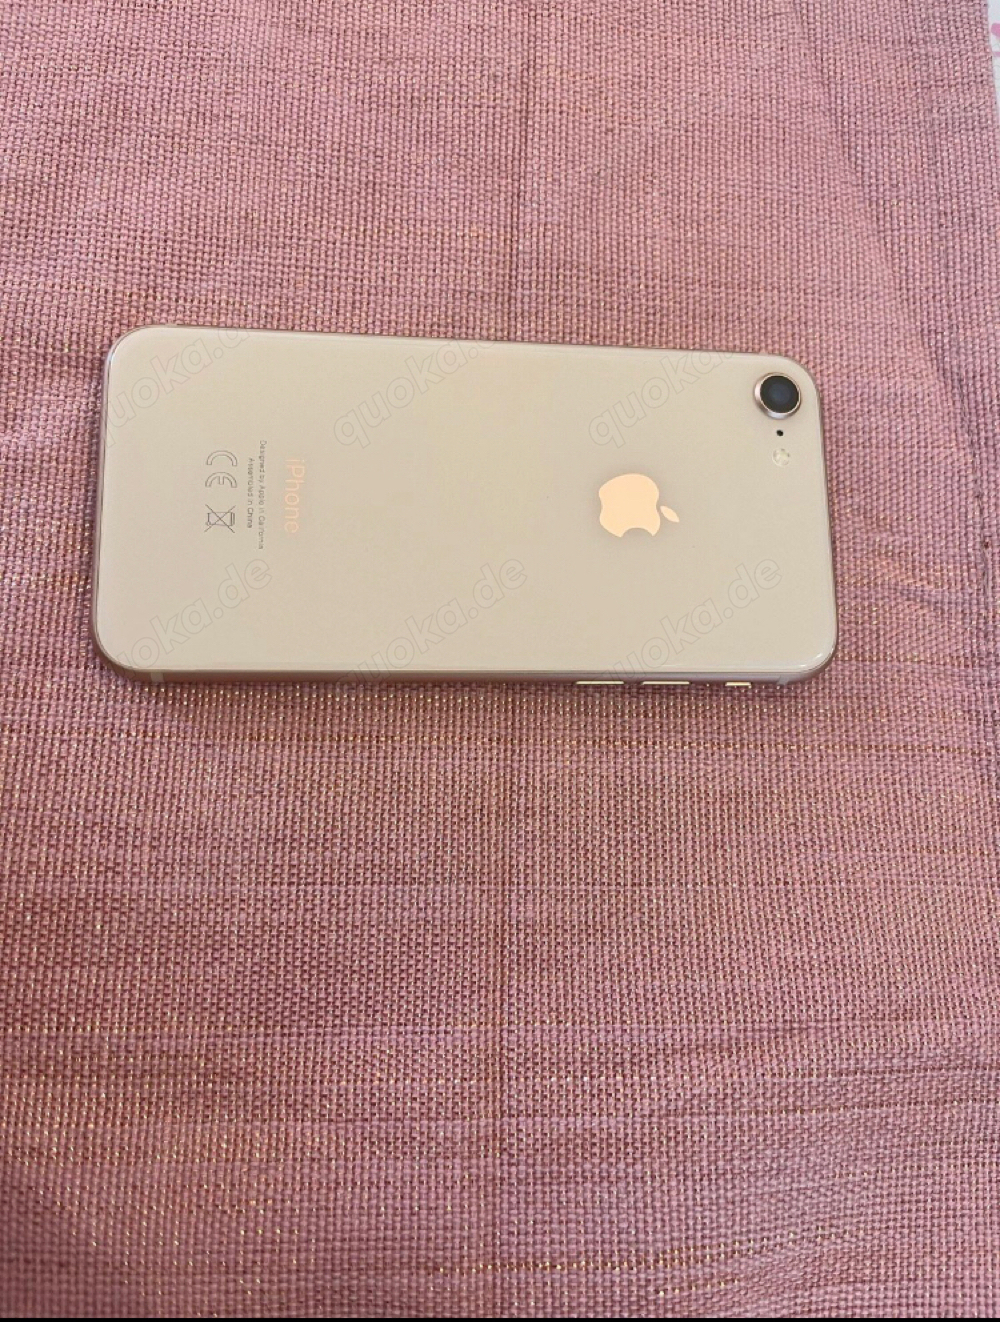 iphone 8 in rosegold